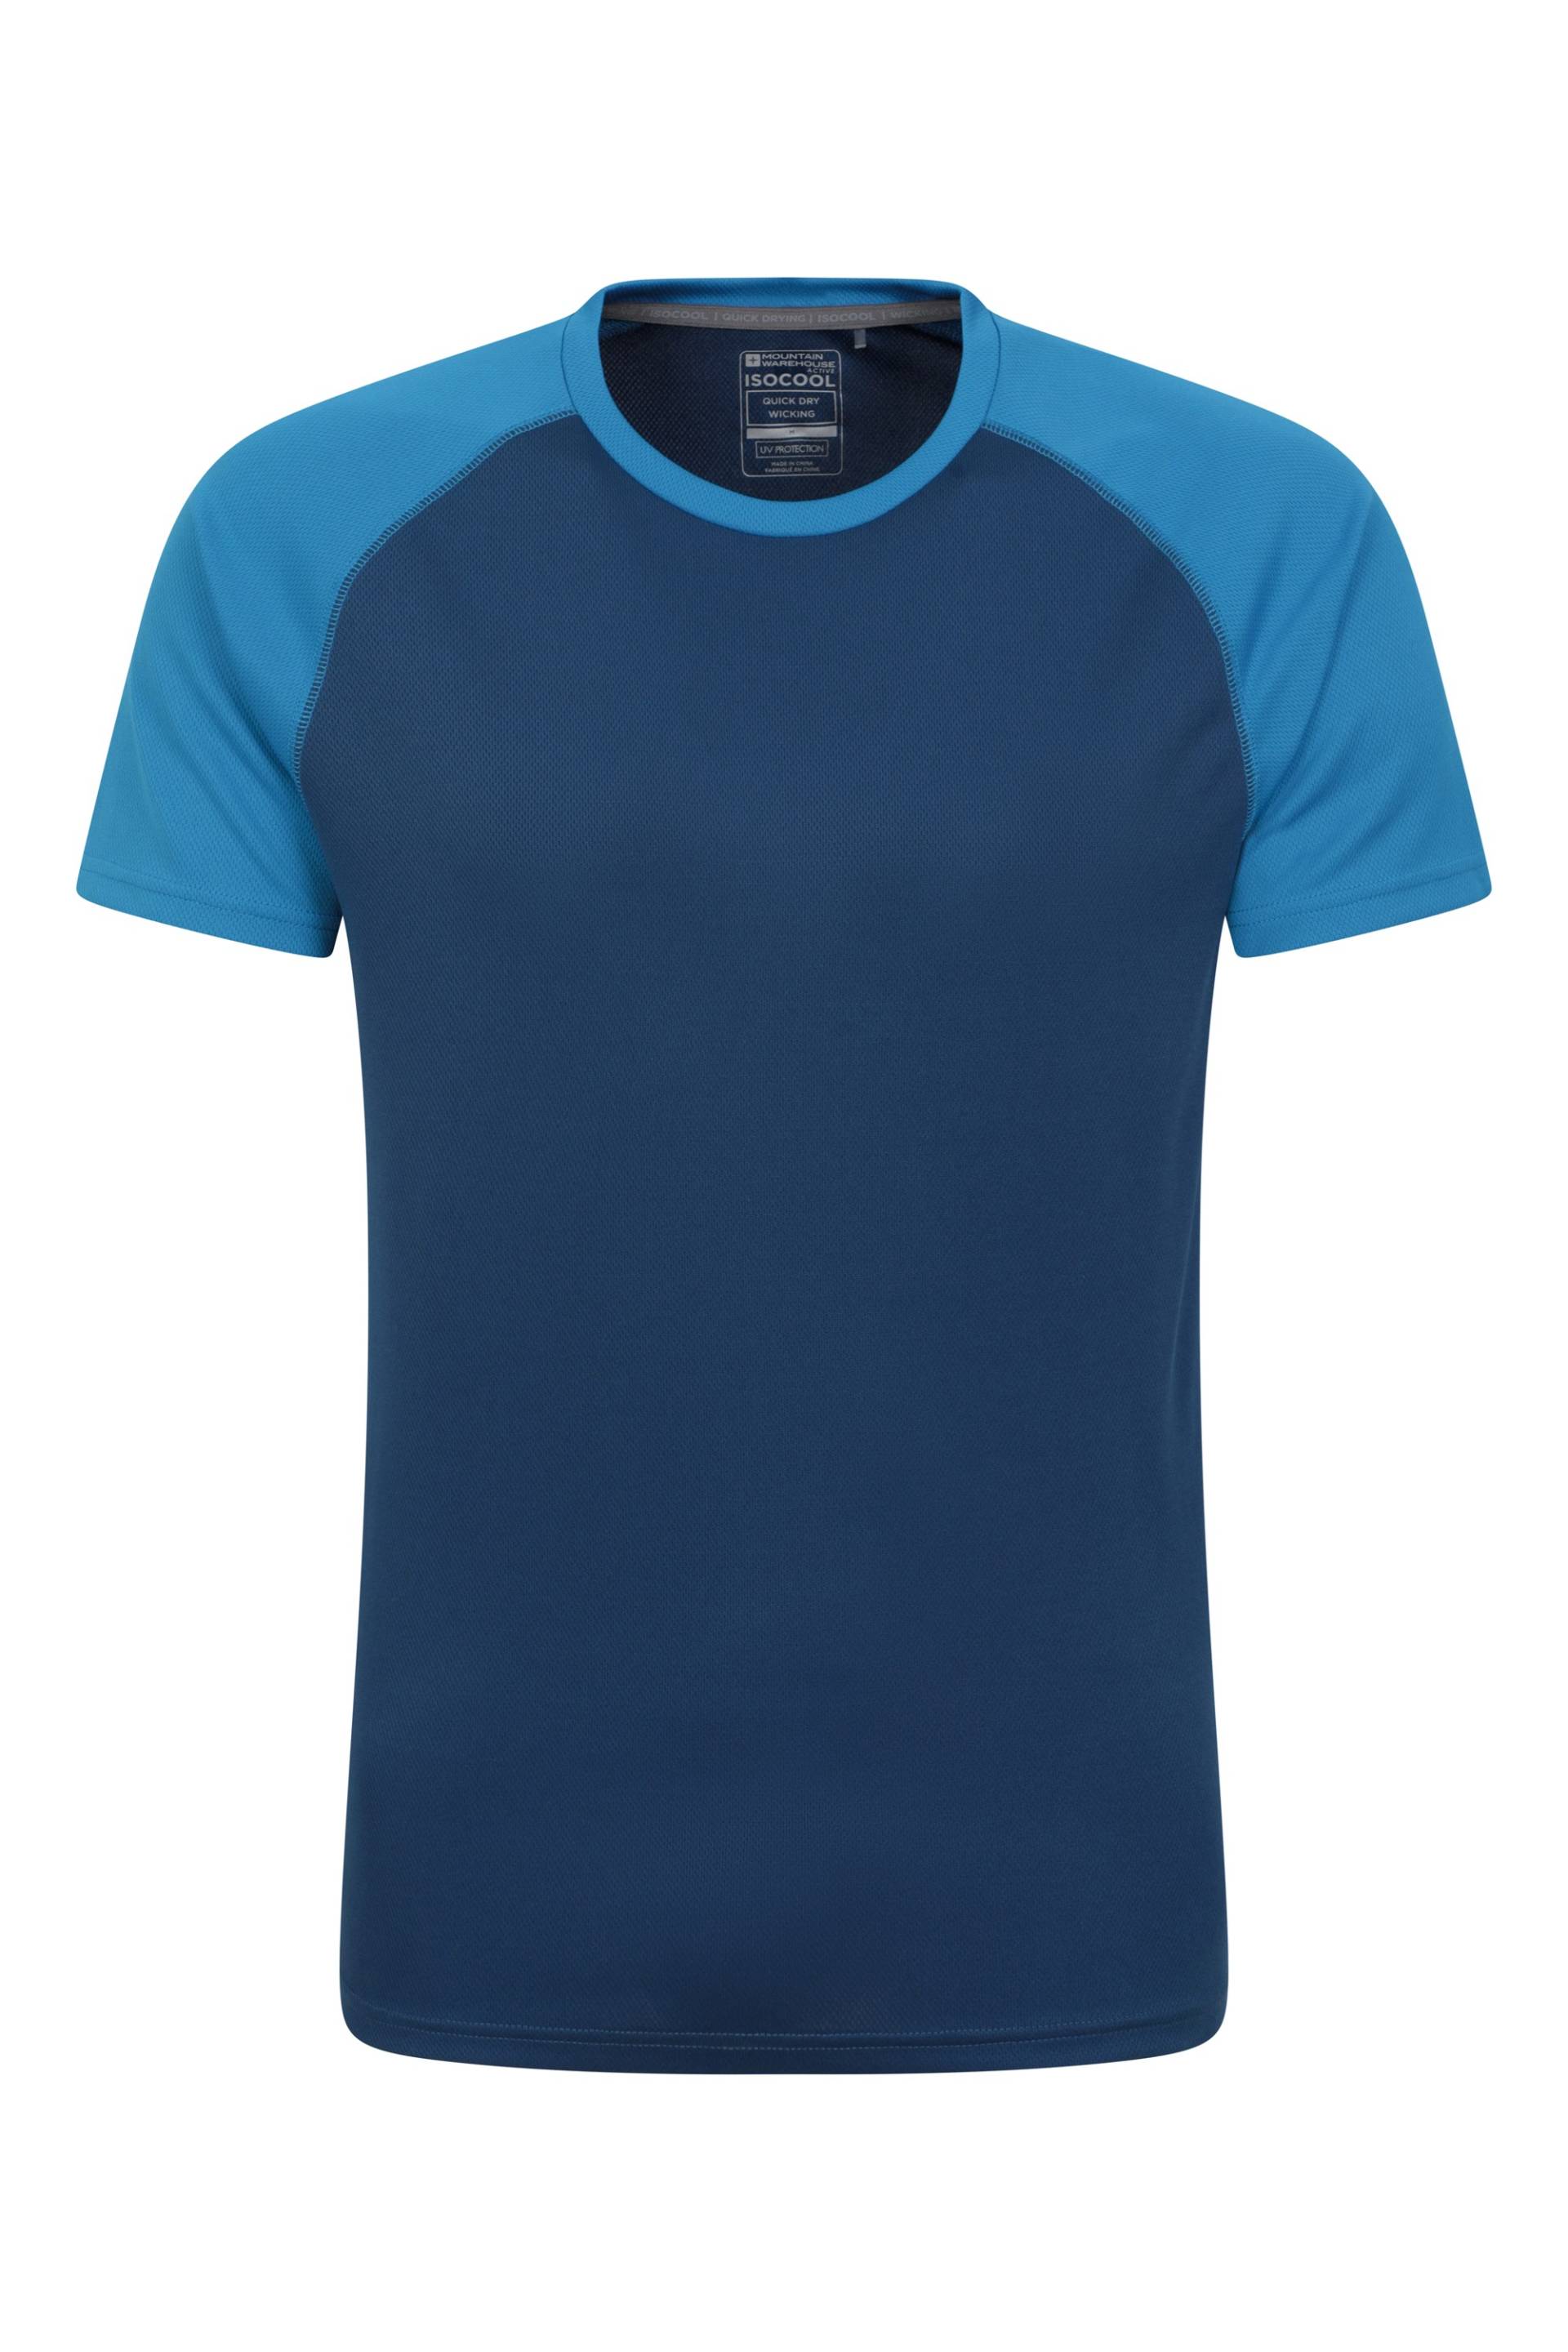 Endurance Herren T-Shirt - Marineblau von Mountain Warehouse